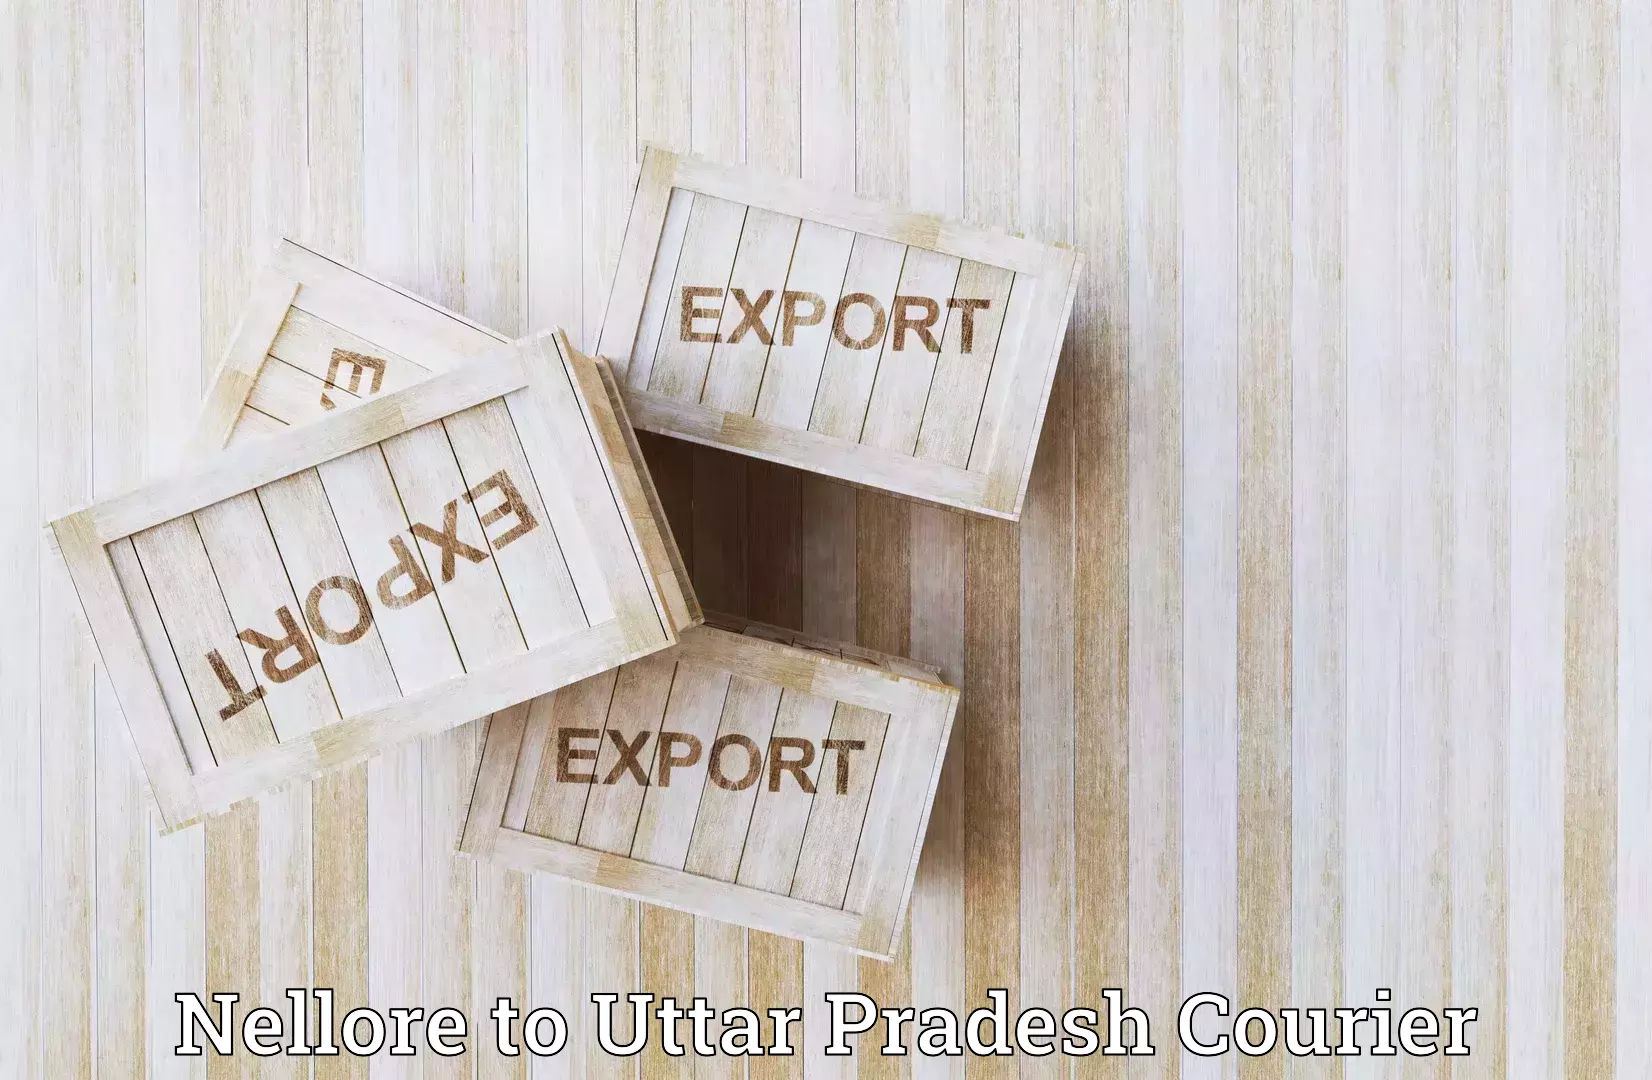 Express logistics providers Nellore to Agra